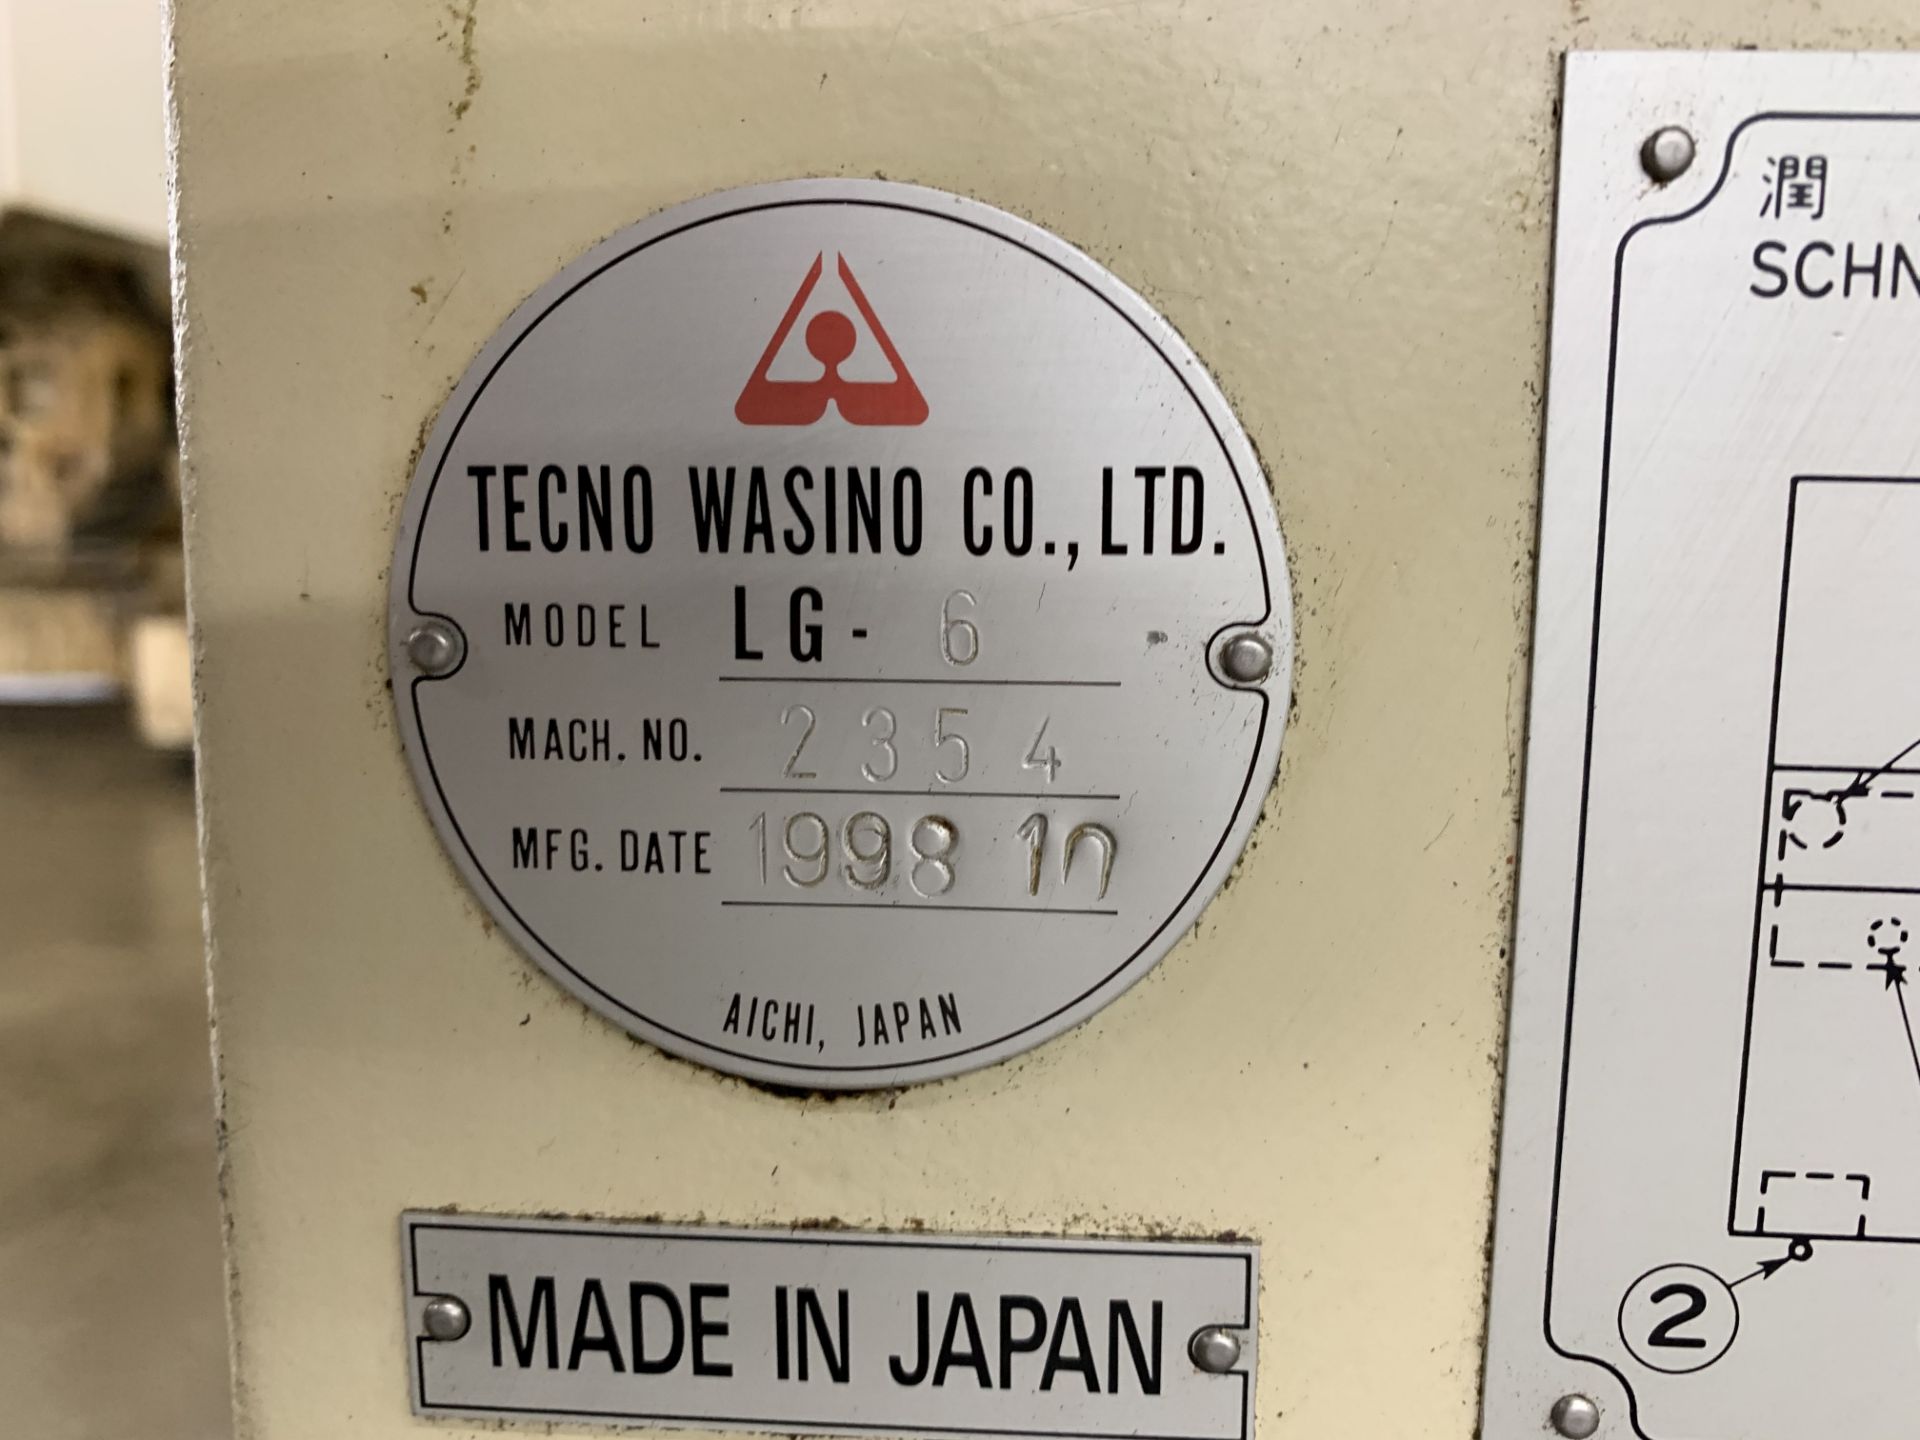 TECNO WASINO MODEL LG-6 CNC CHUCKER; S/N 2354 (NEW 1998) - Image 9 of 9